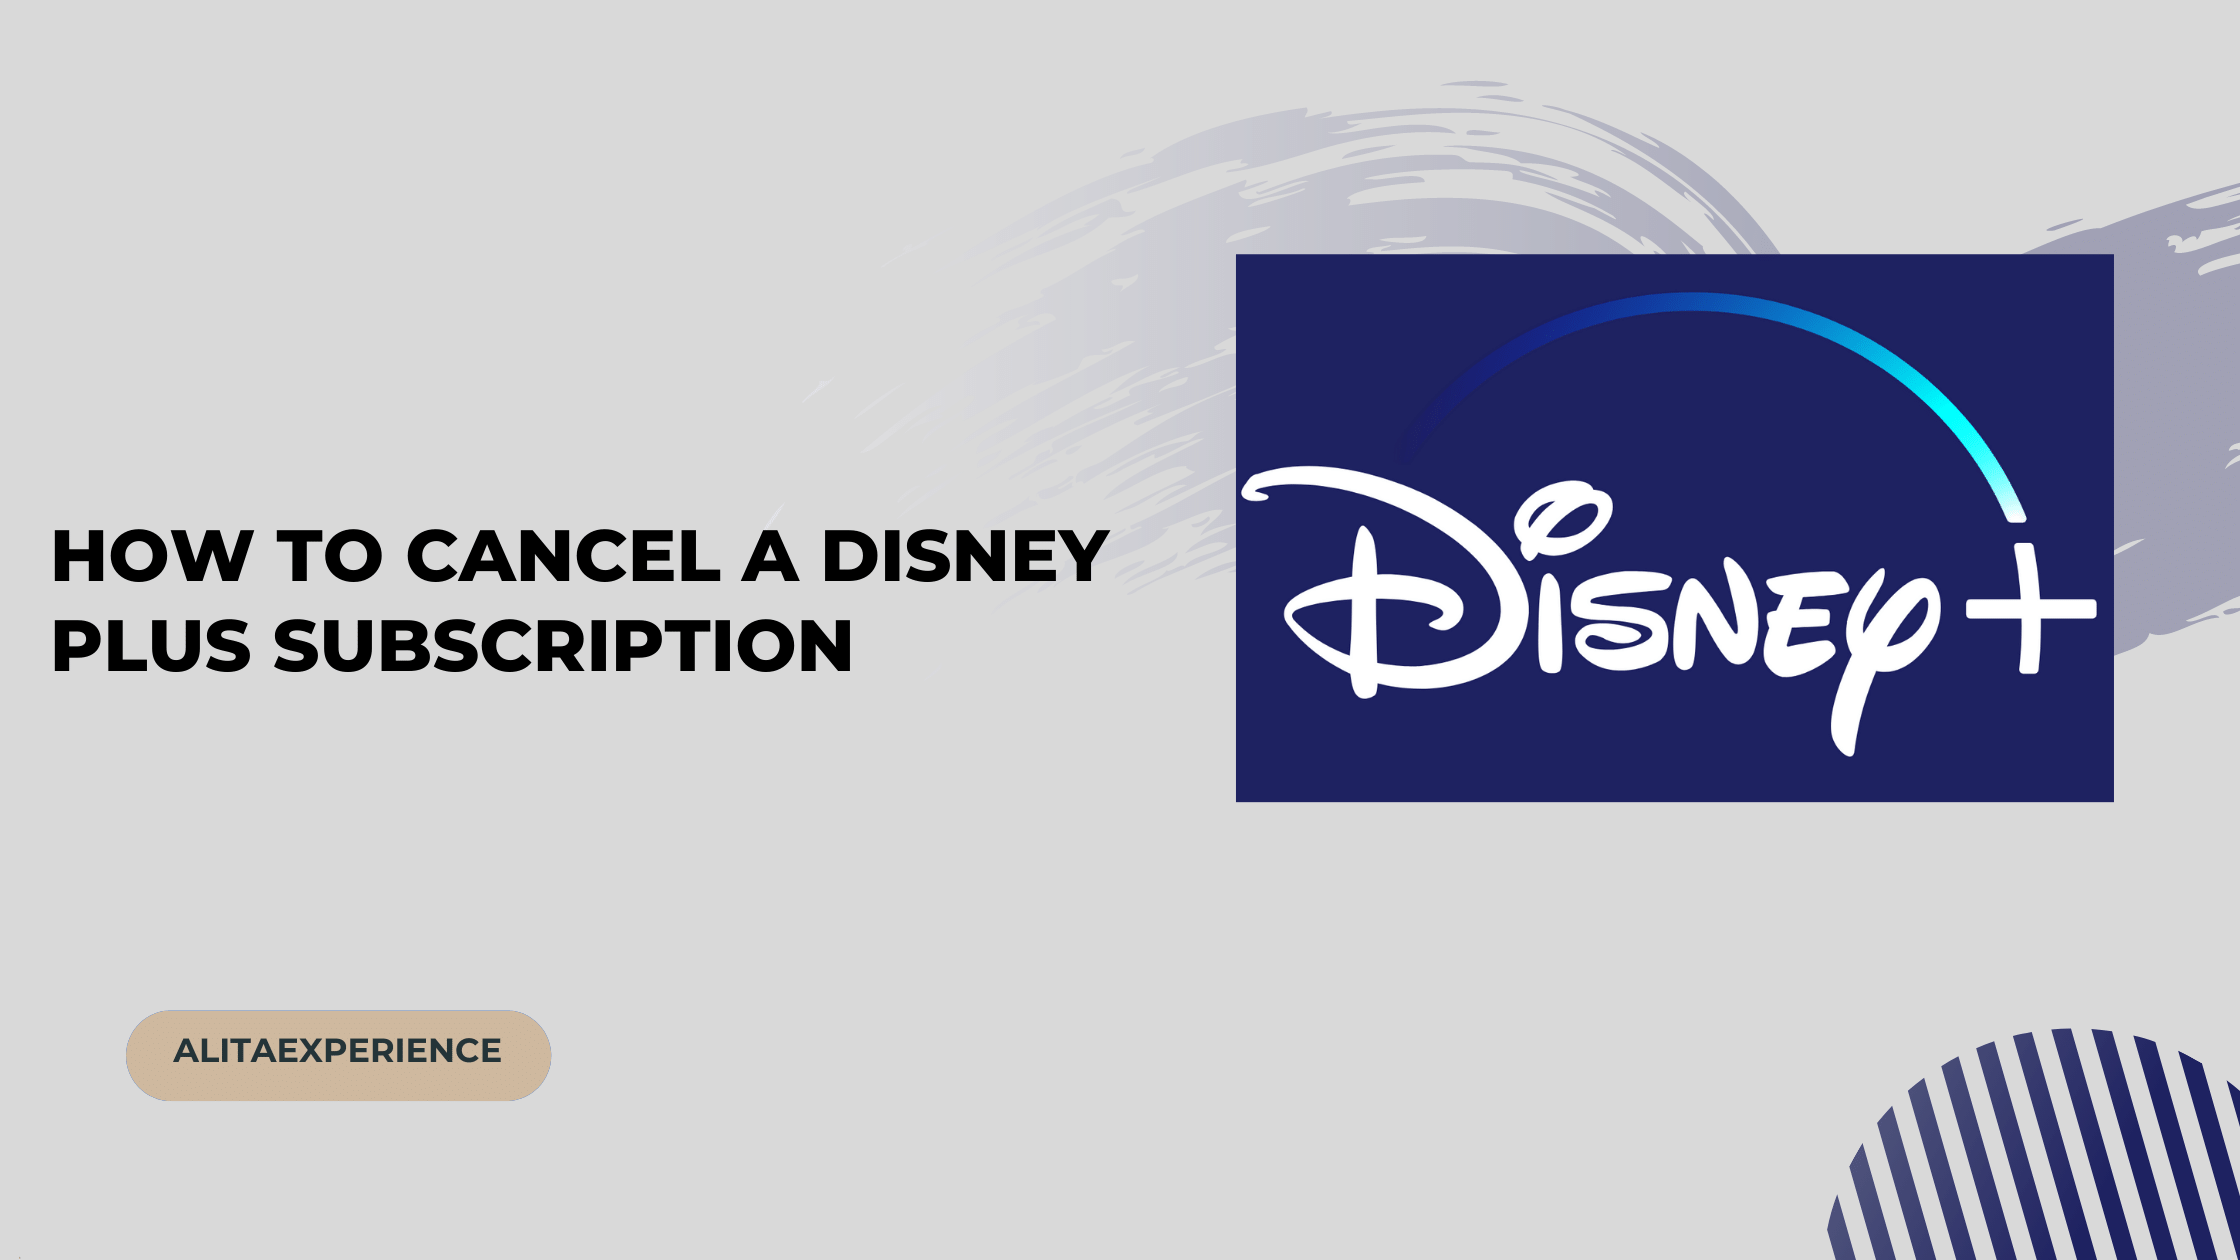 How To Cancel Disney Plus Subscription On Roku, Amazon & More